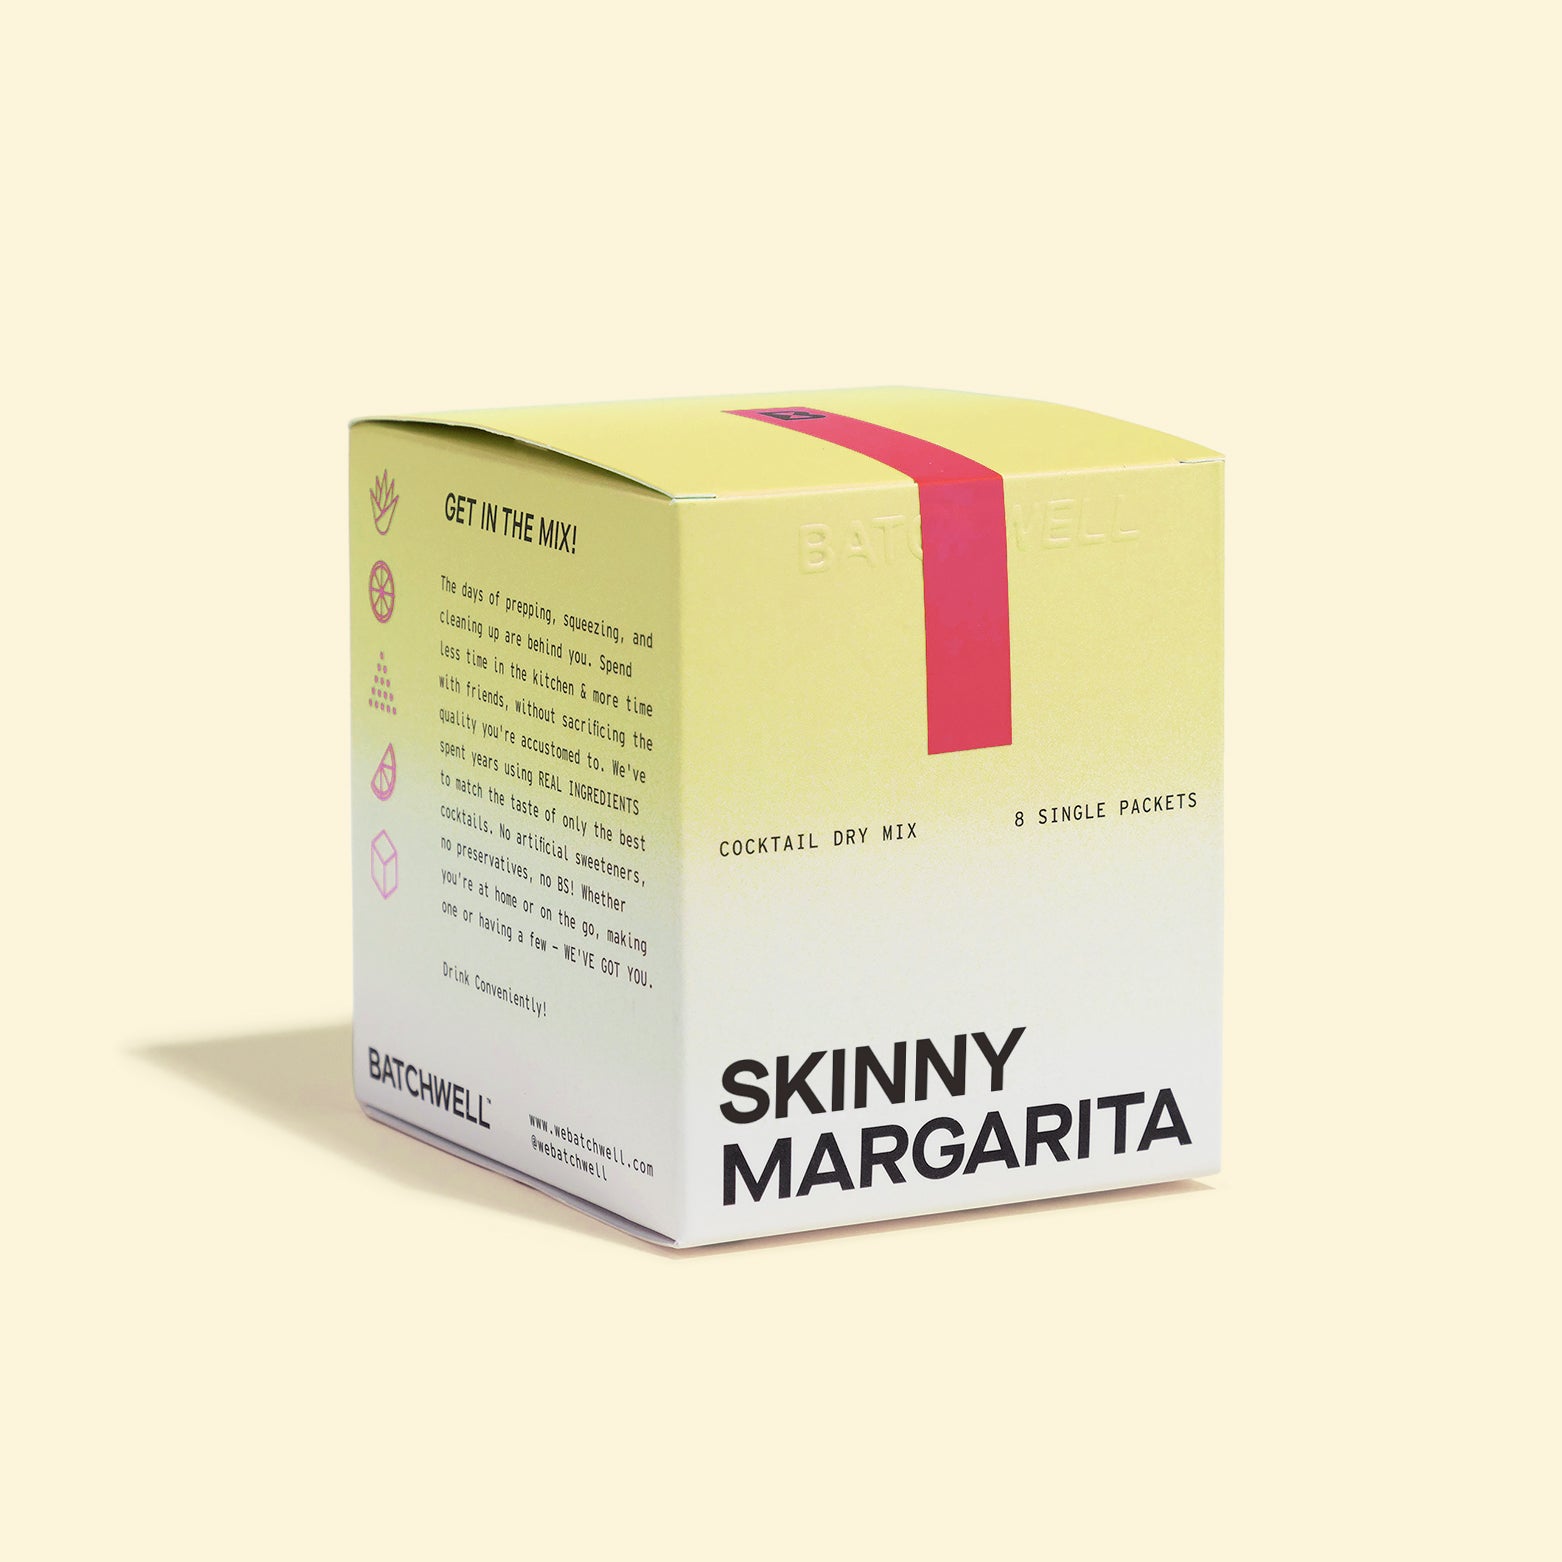 Skinny margarita mix